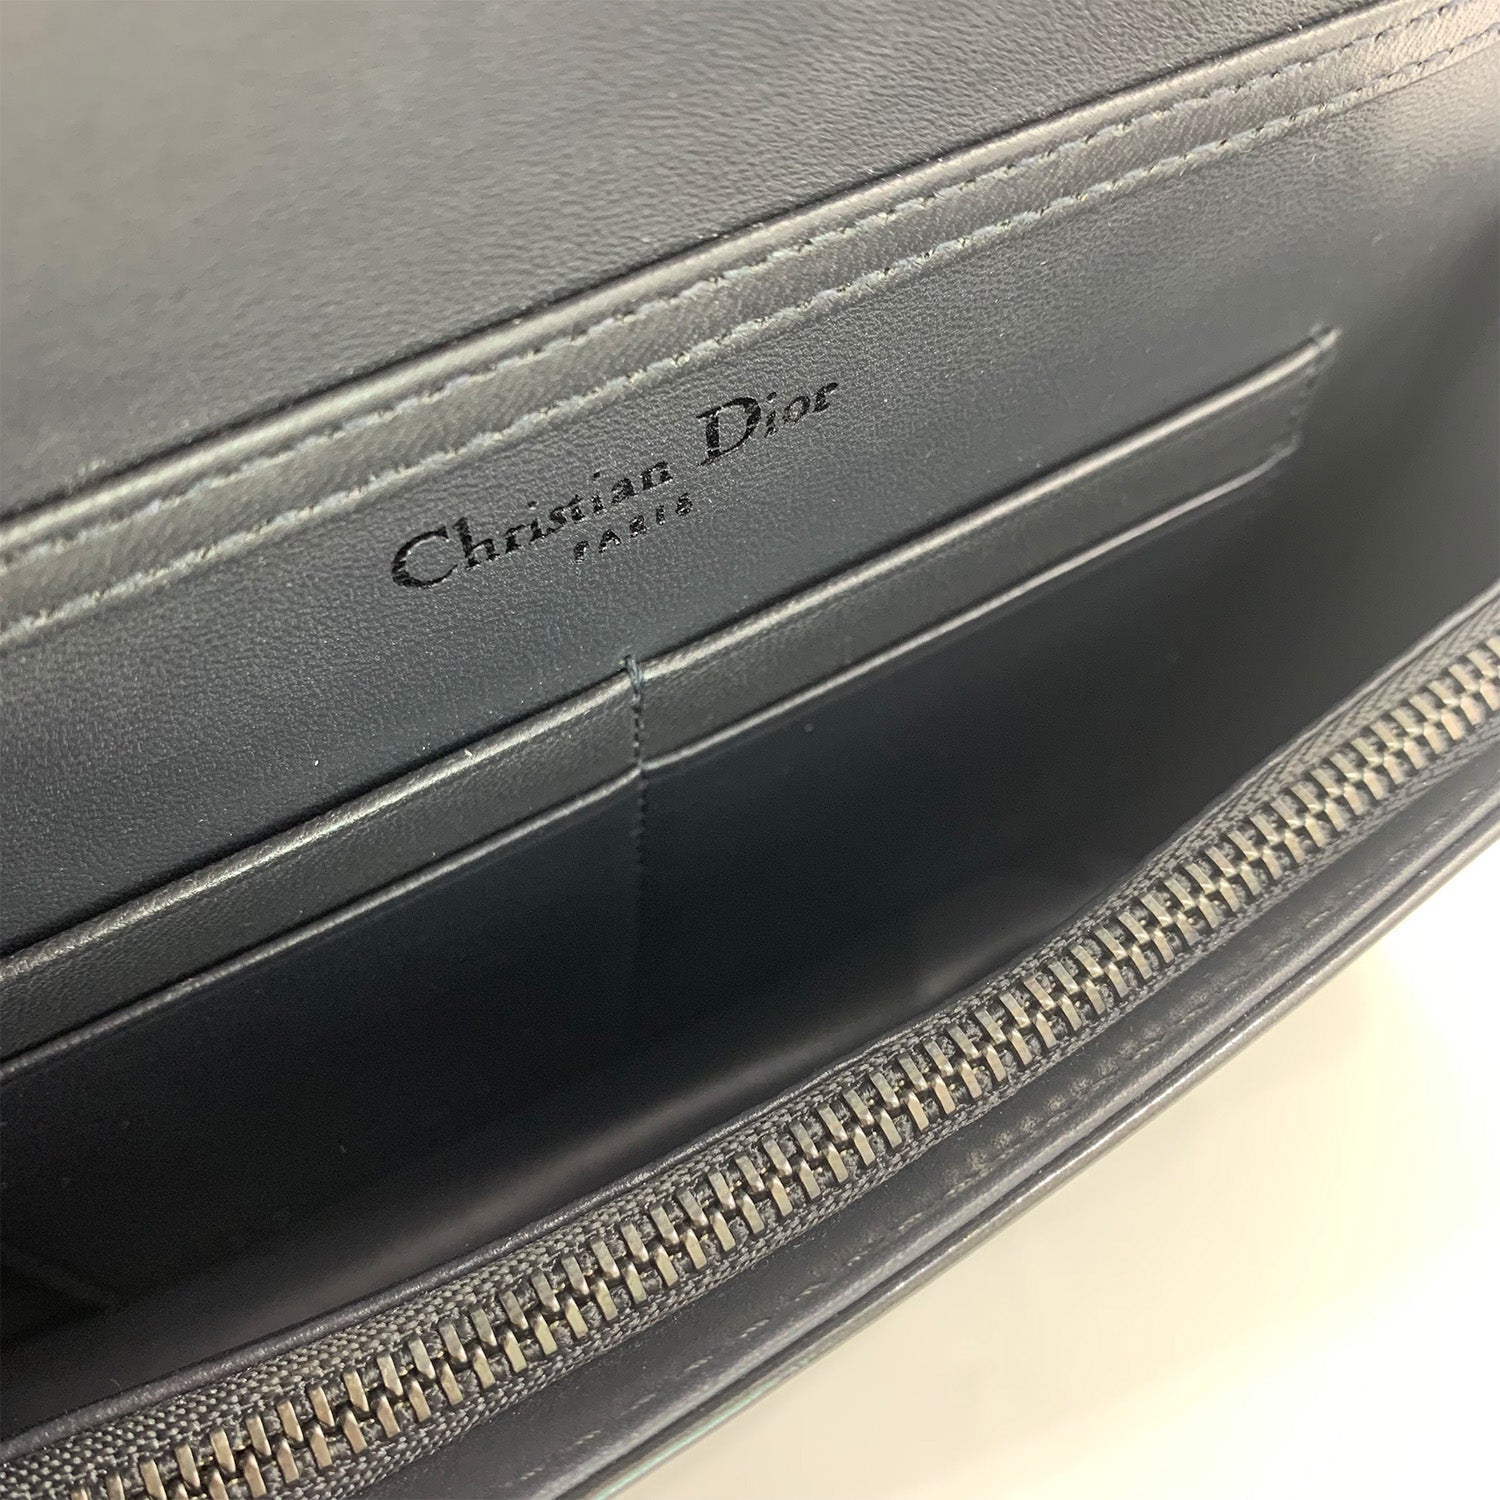 Diorama leather handbag Dior Black in Leather - 36104869